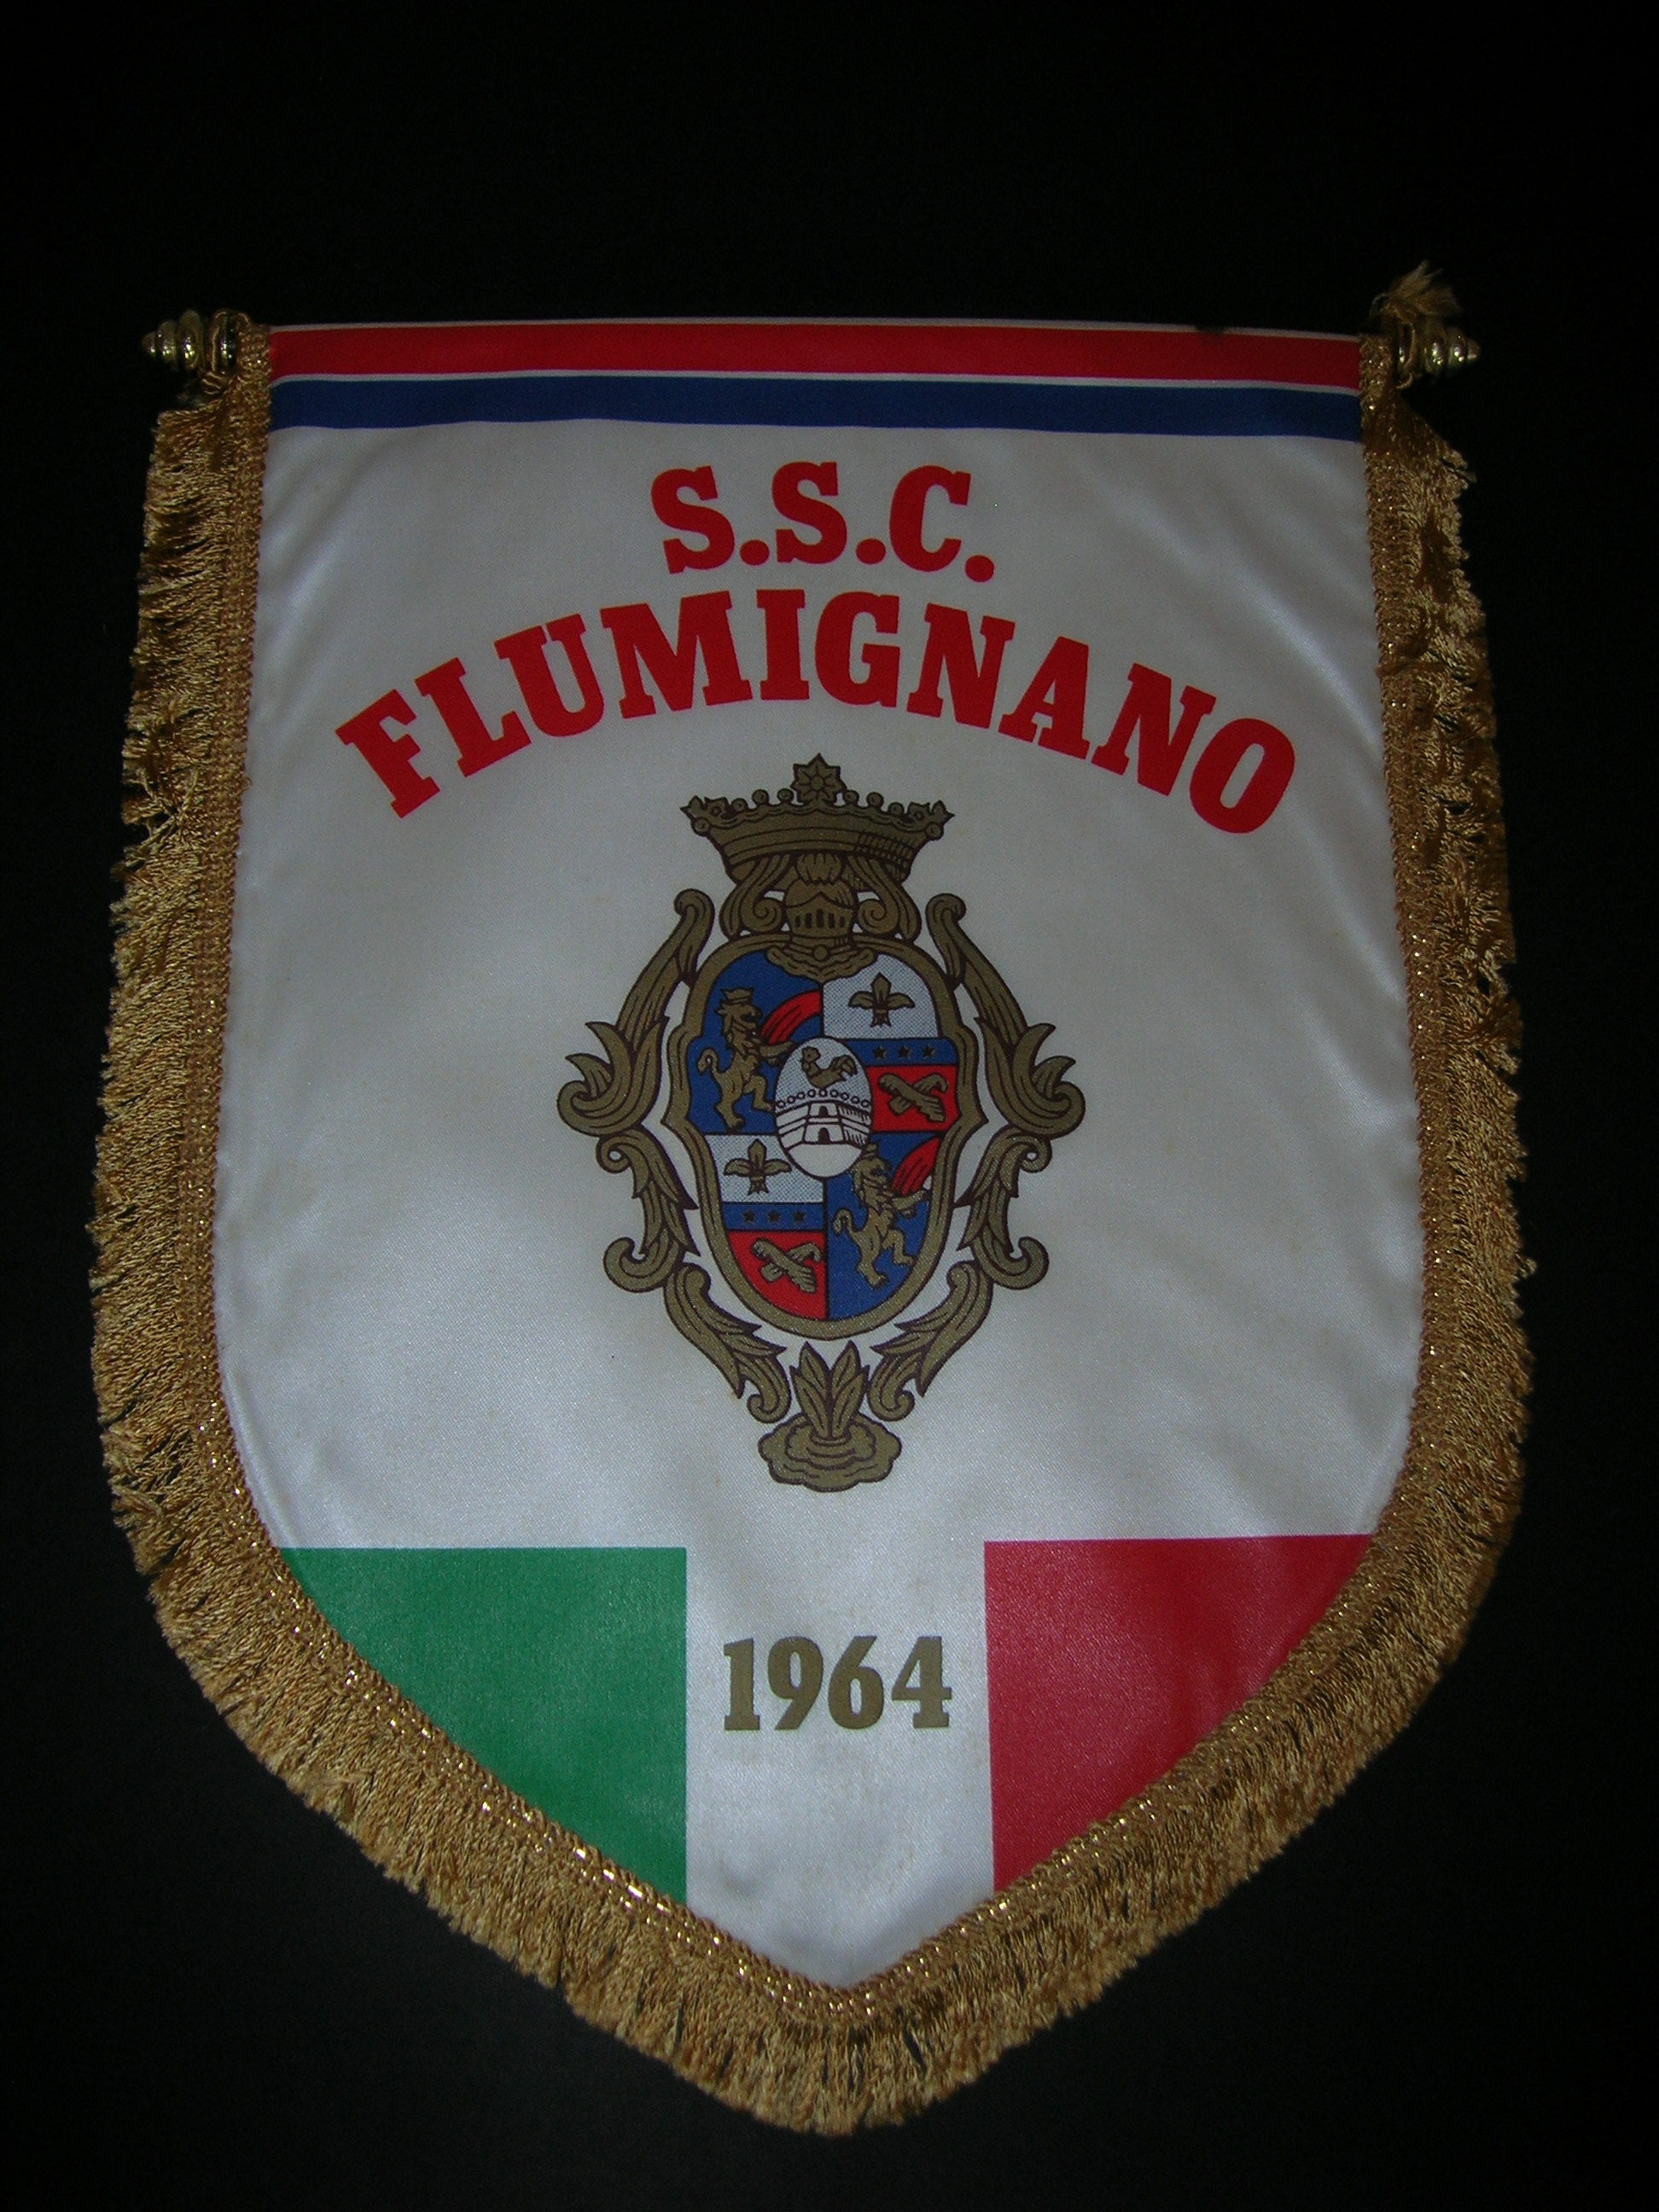 S S C.  Flumignano  1964 - 233